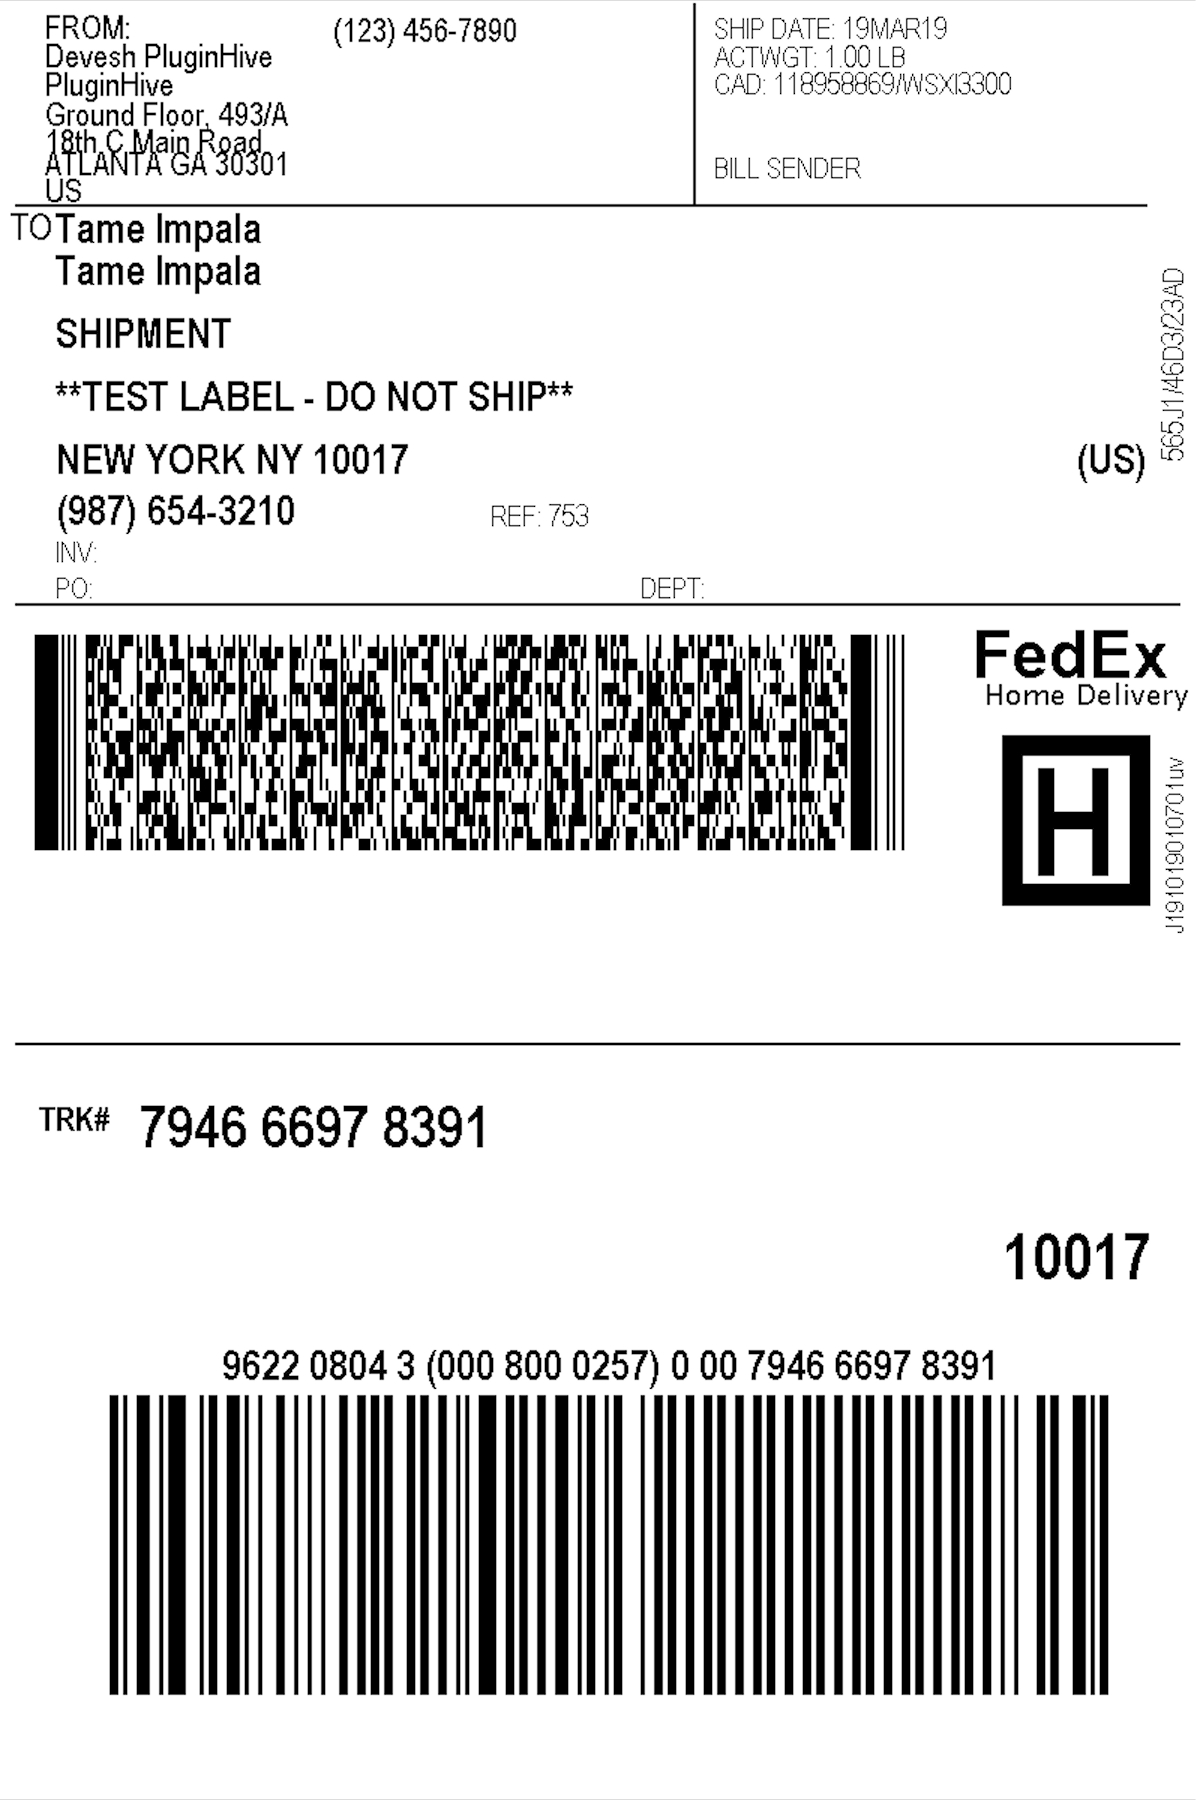 Fedex Ground Return Label In Fedex Label Template Word